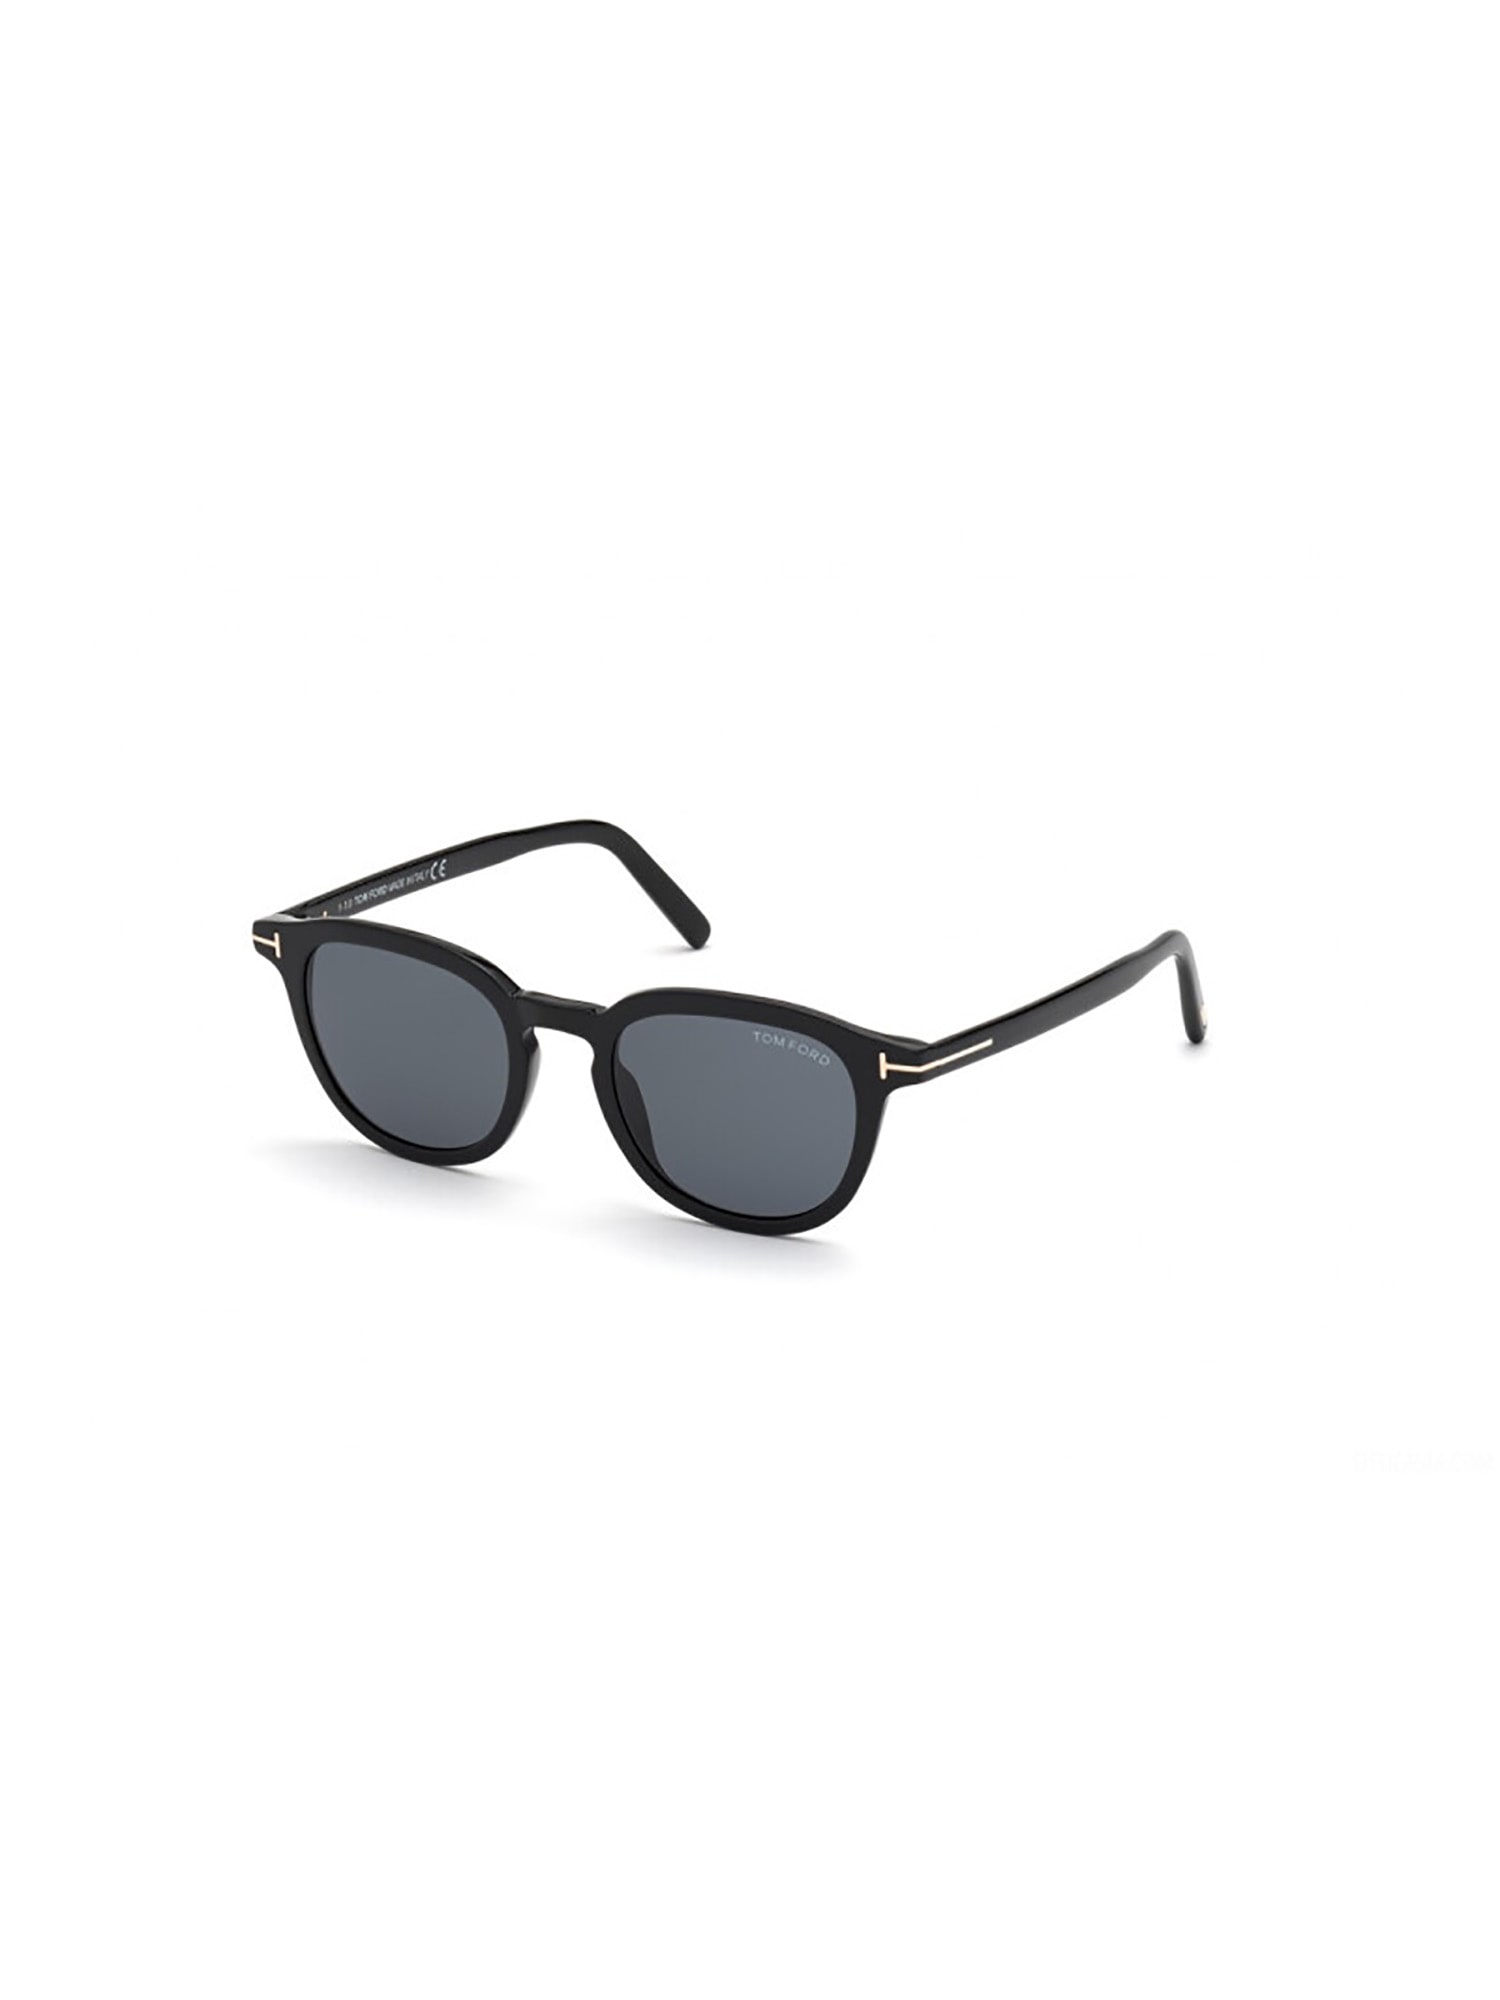 Tom Ford FT0816 Sunglasses